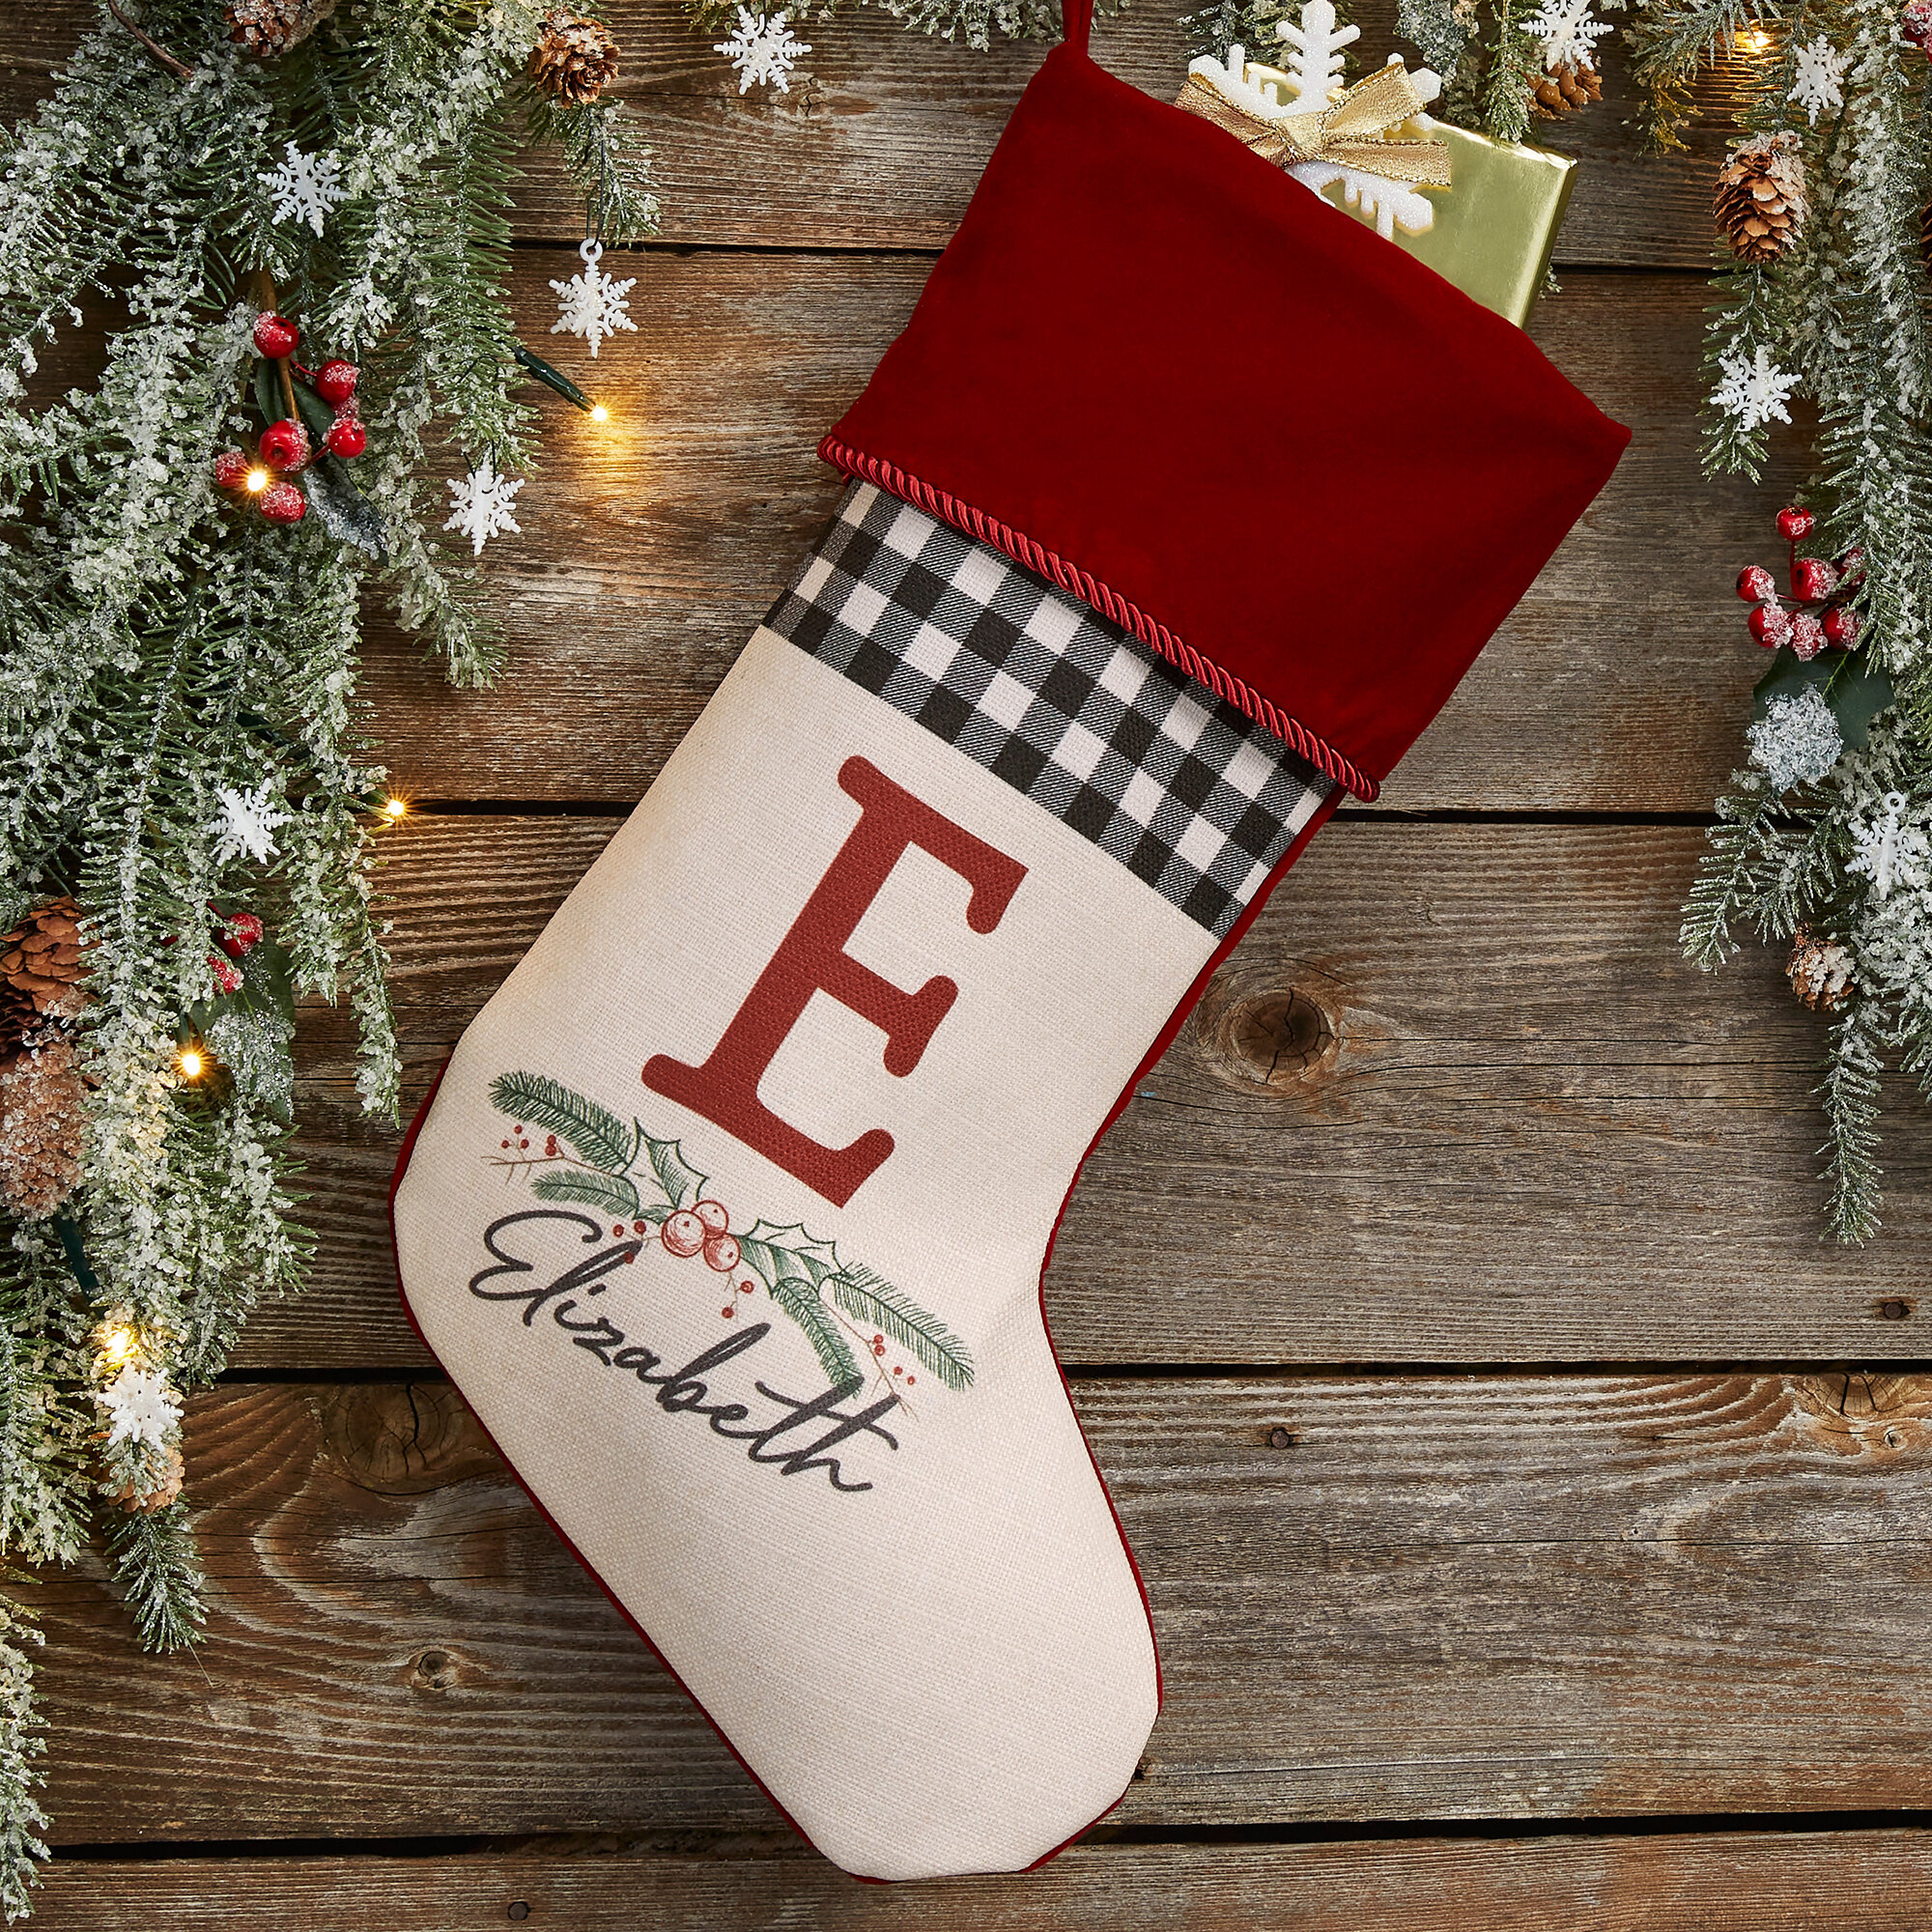 Custom Imprinted Felt Christmas Stockings